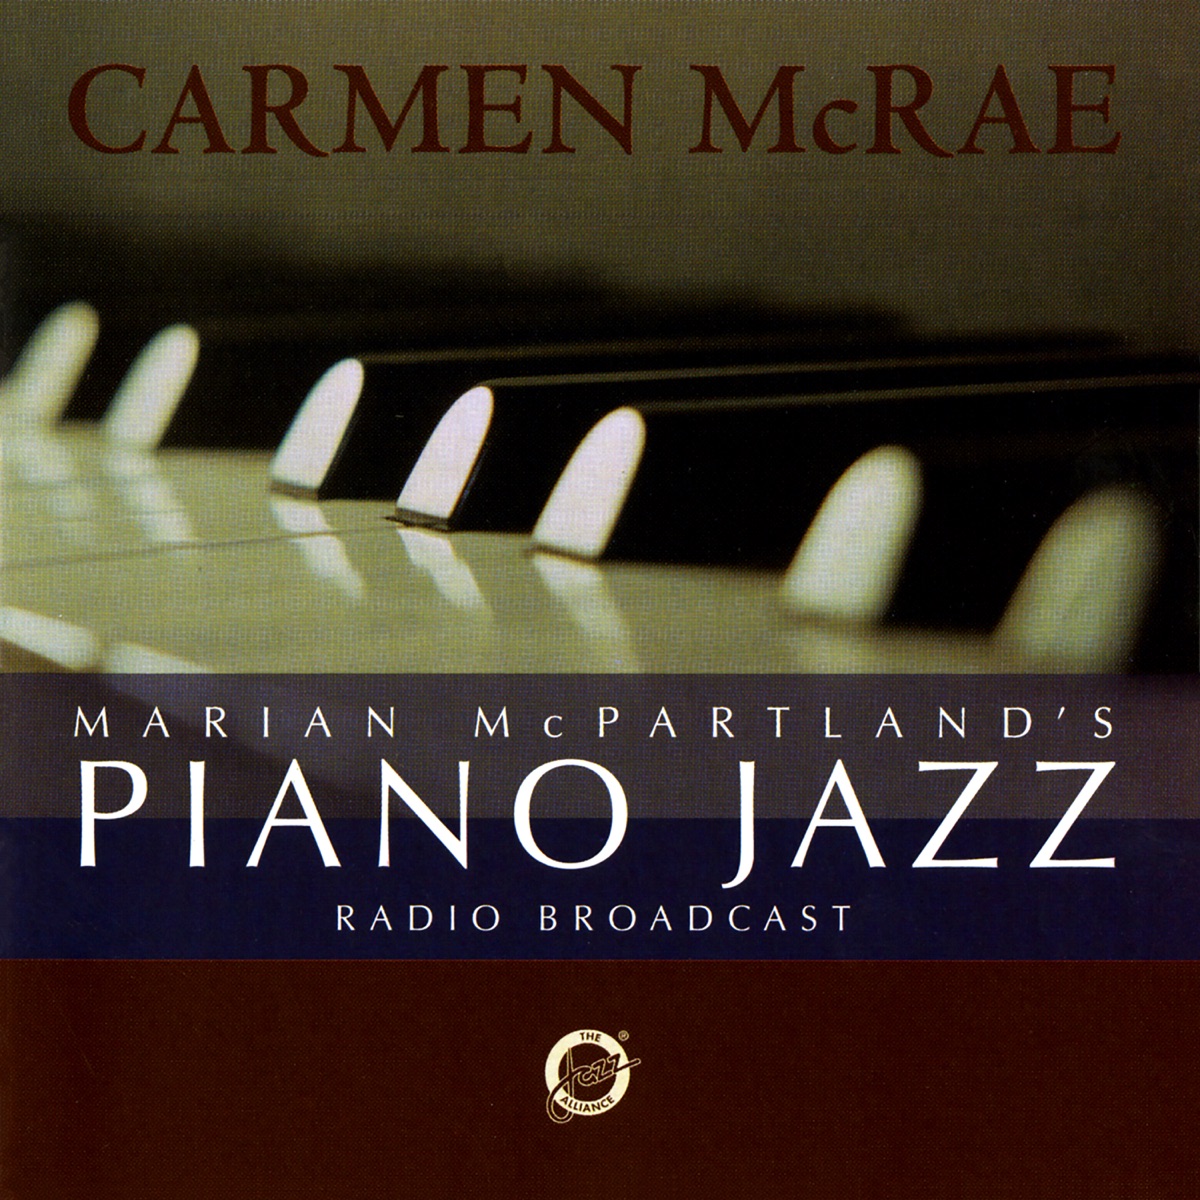 Marian McPartland's Piano Jazz Radio Broadcast With Carmen McRae - Album by  Carmen McRae - Apple Music